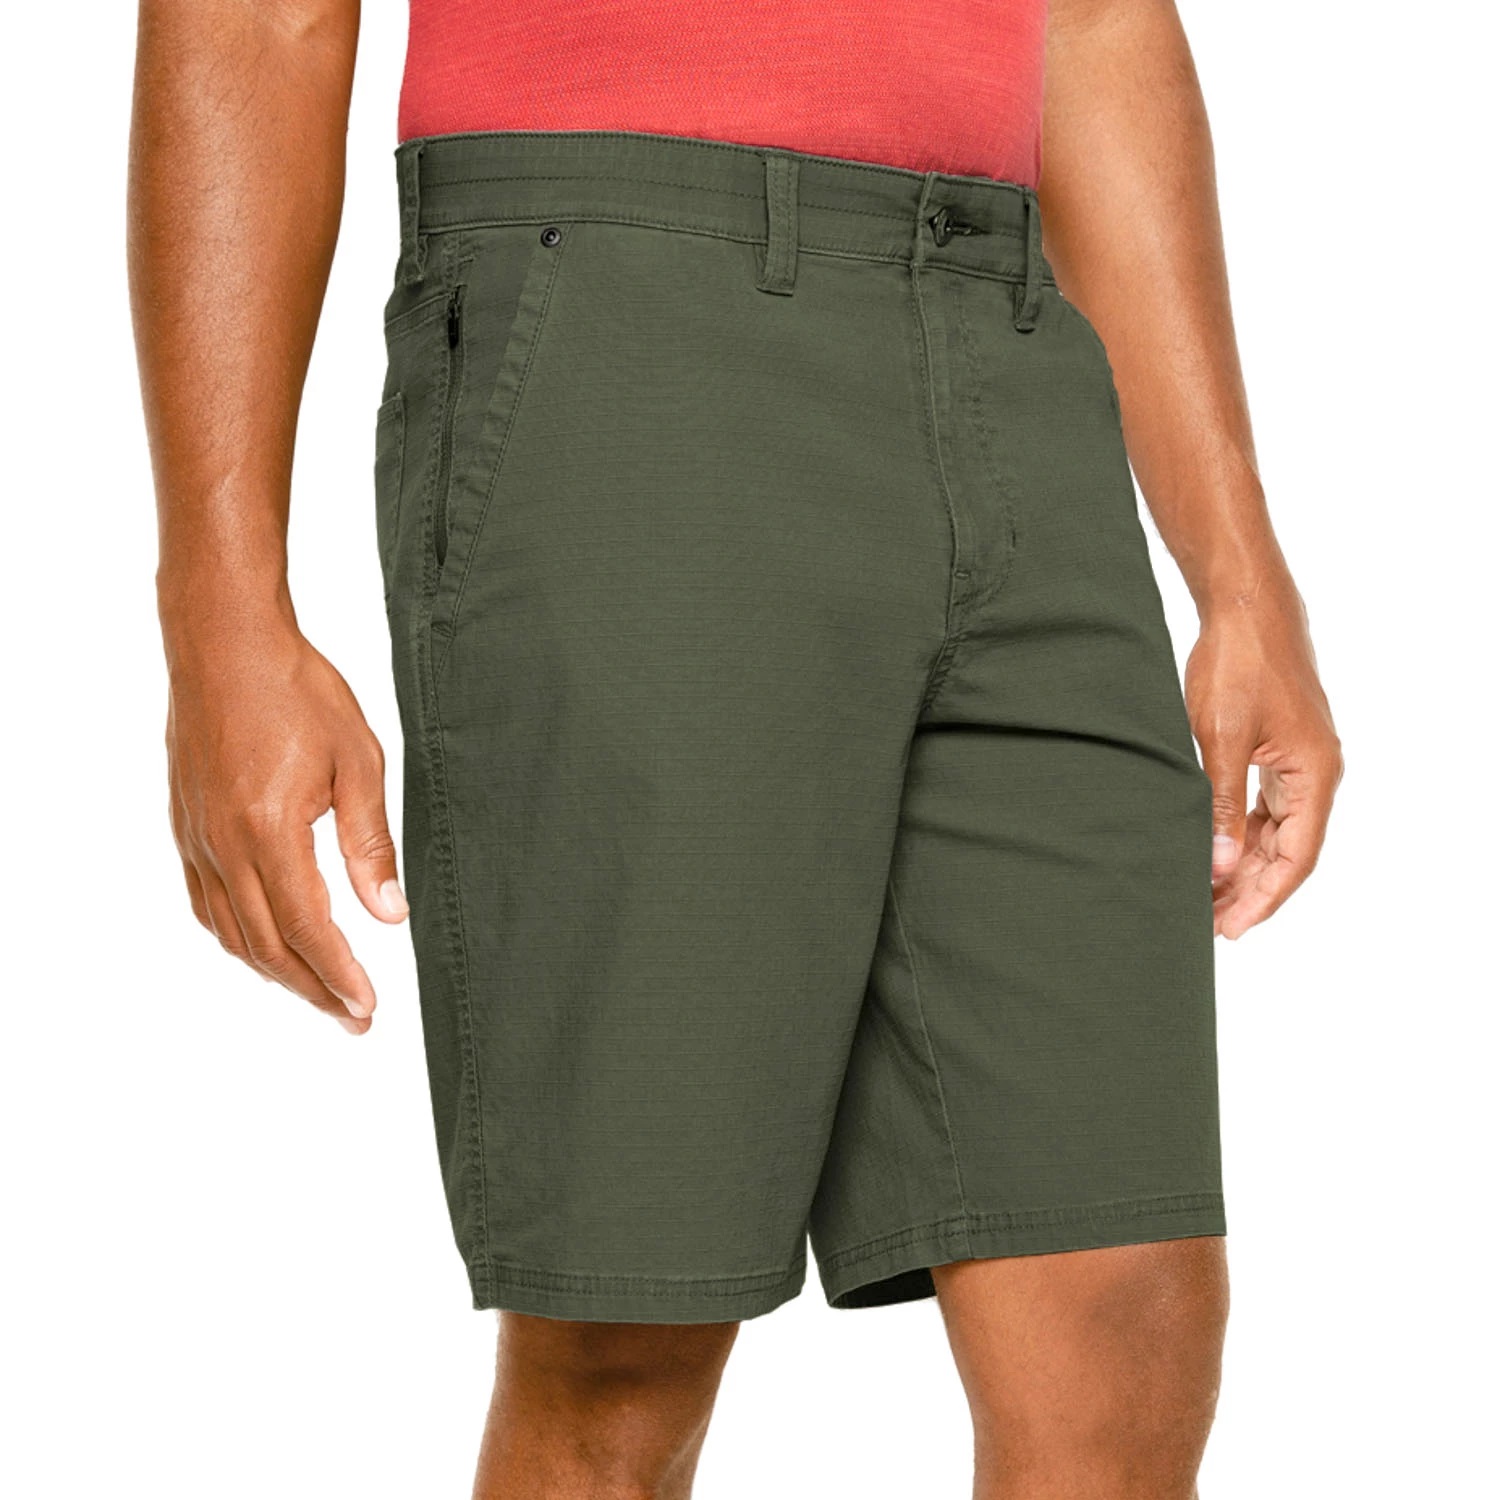 Weatherproof Men's Short Ripstop Utility Short |Big Pocket Men Short|Flex Waistband Short - Military Green 34W